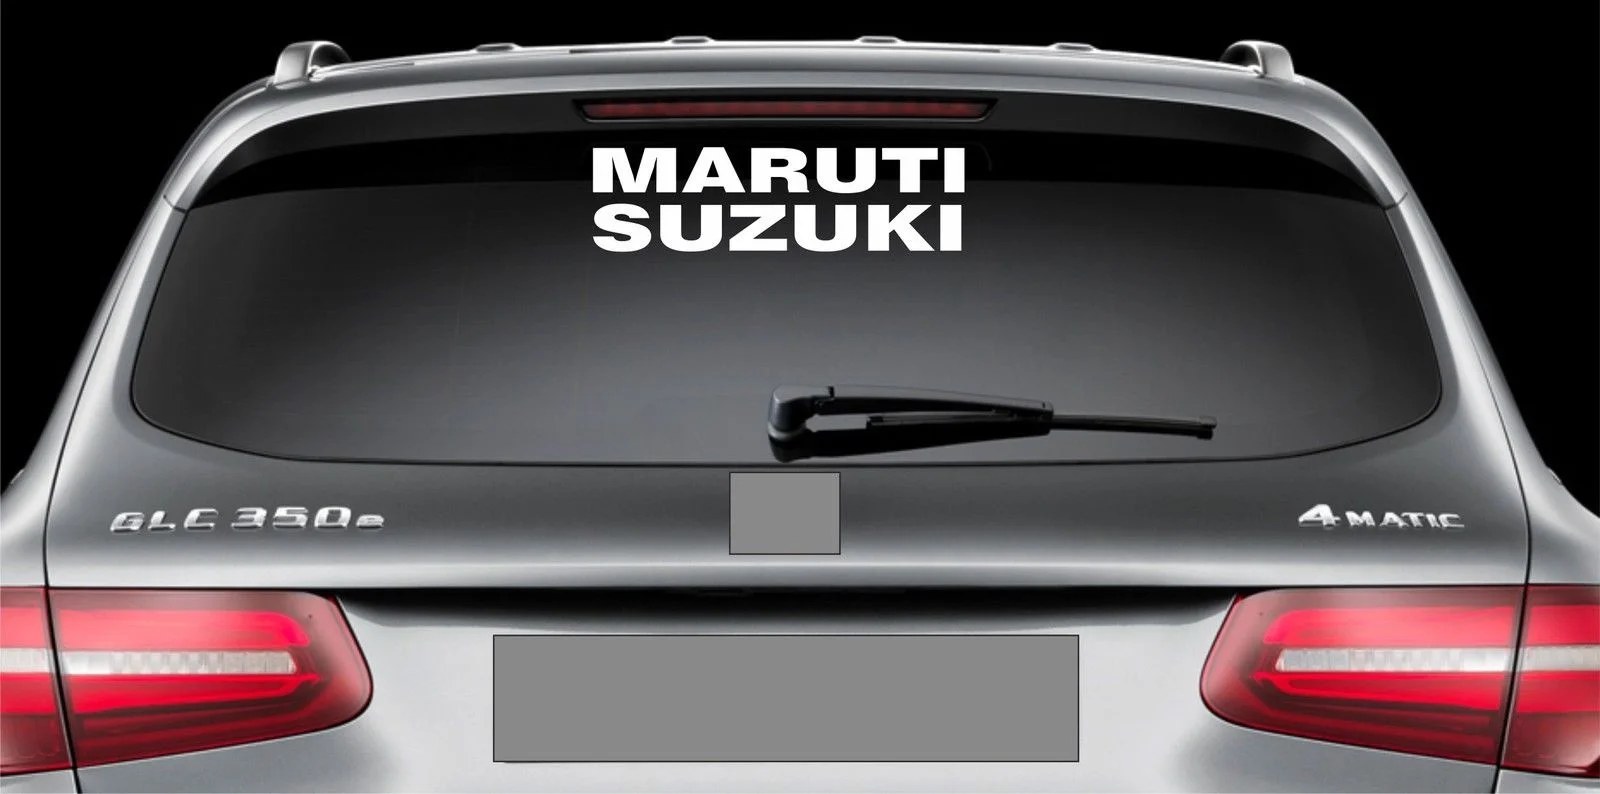 For Rear Window Sticker fits Suzuki Maruti Vinyl Decal Car Emblem Logo RW114in Car Stickers